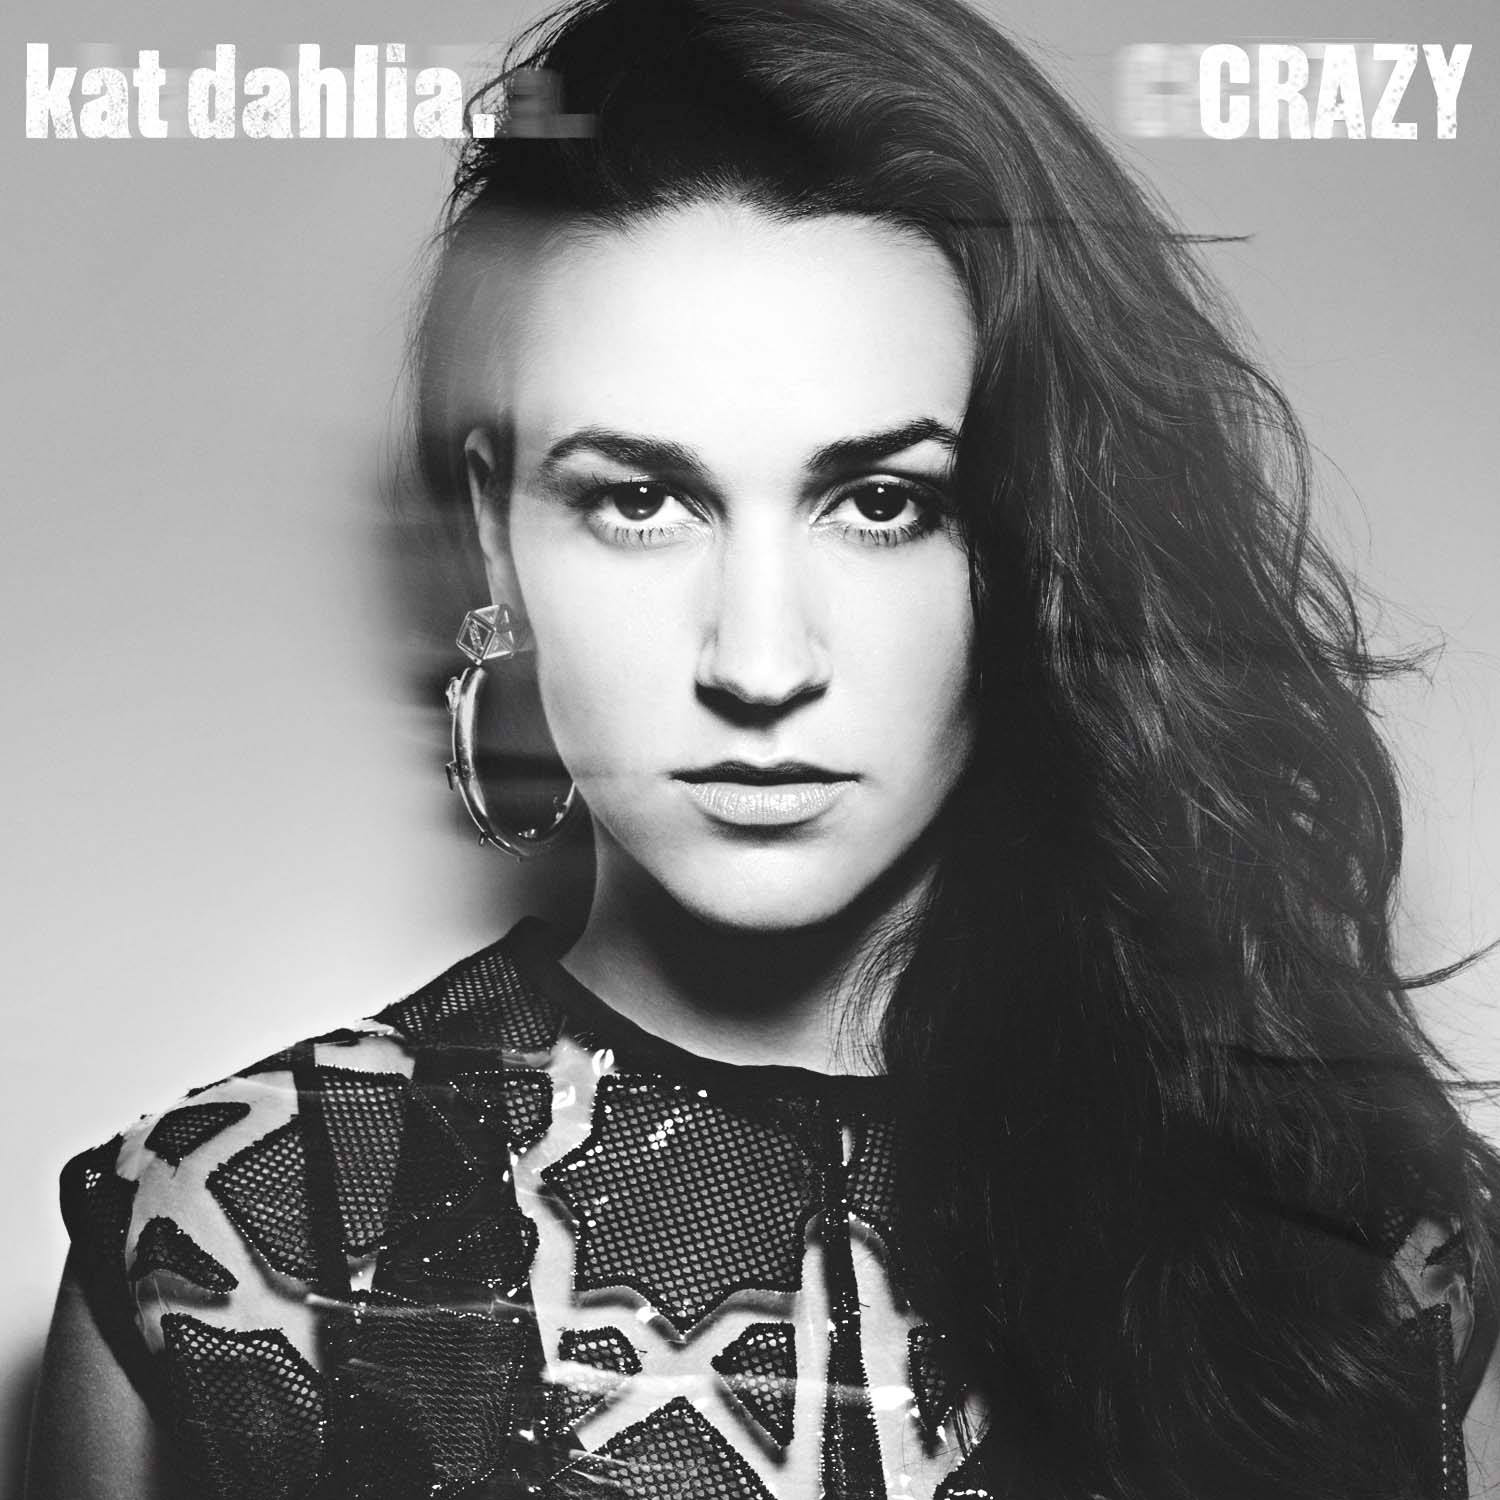 Kat Dahlia - Crazy